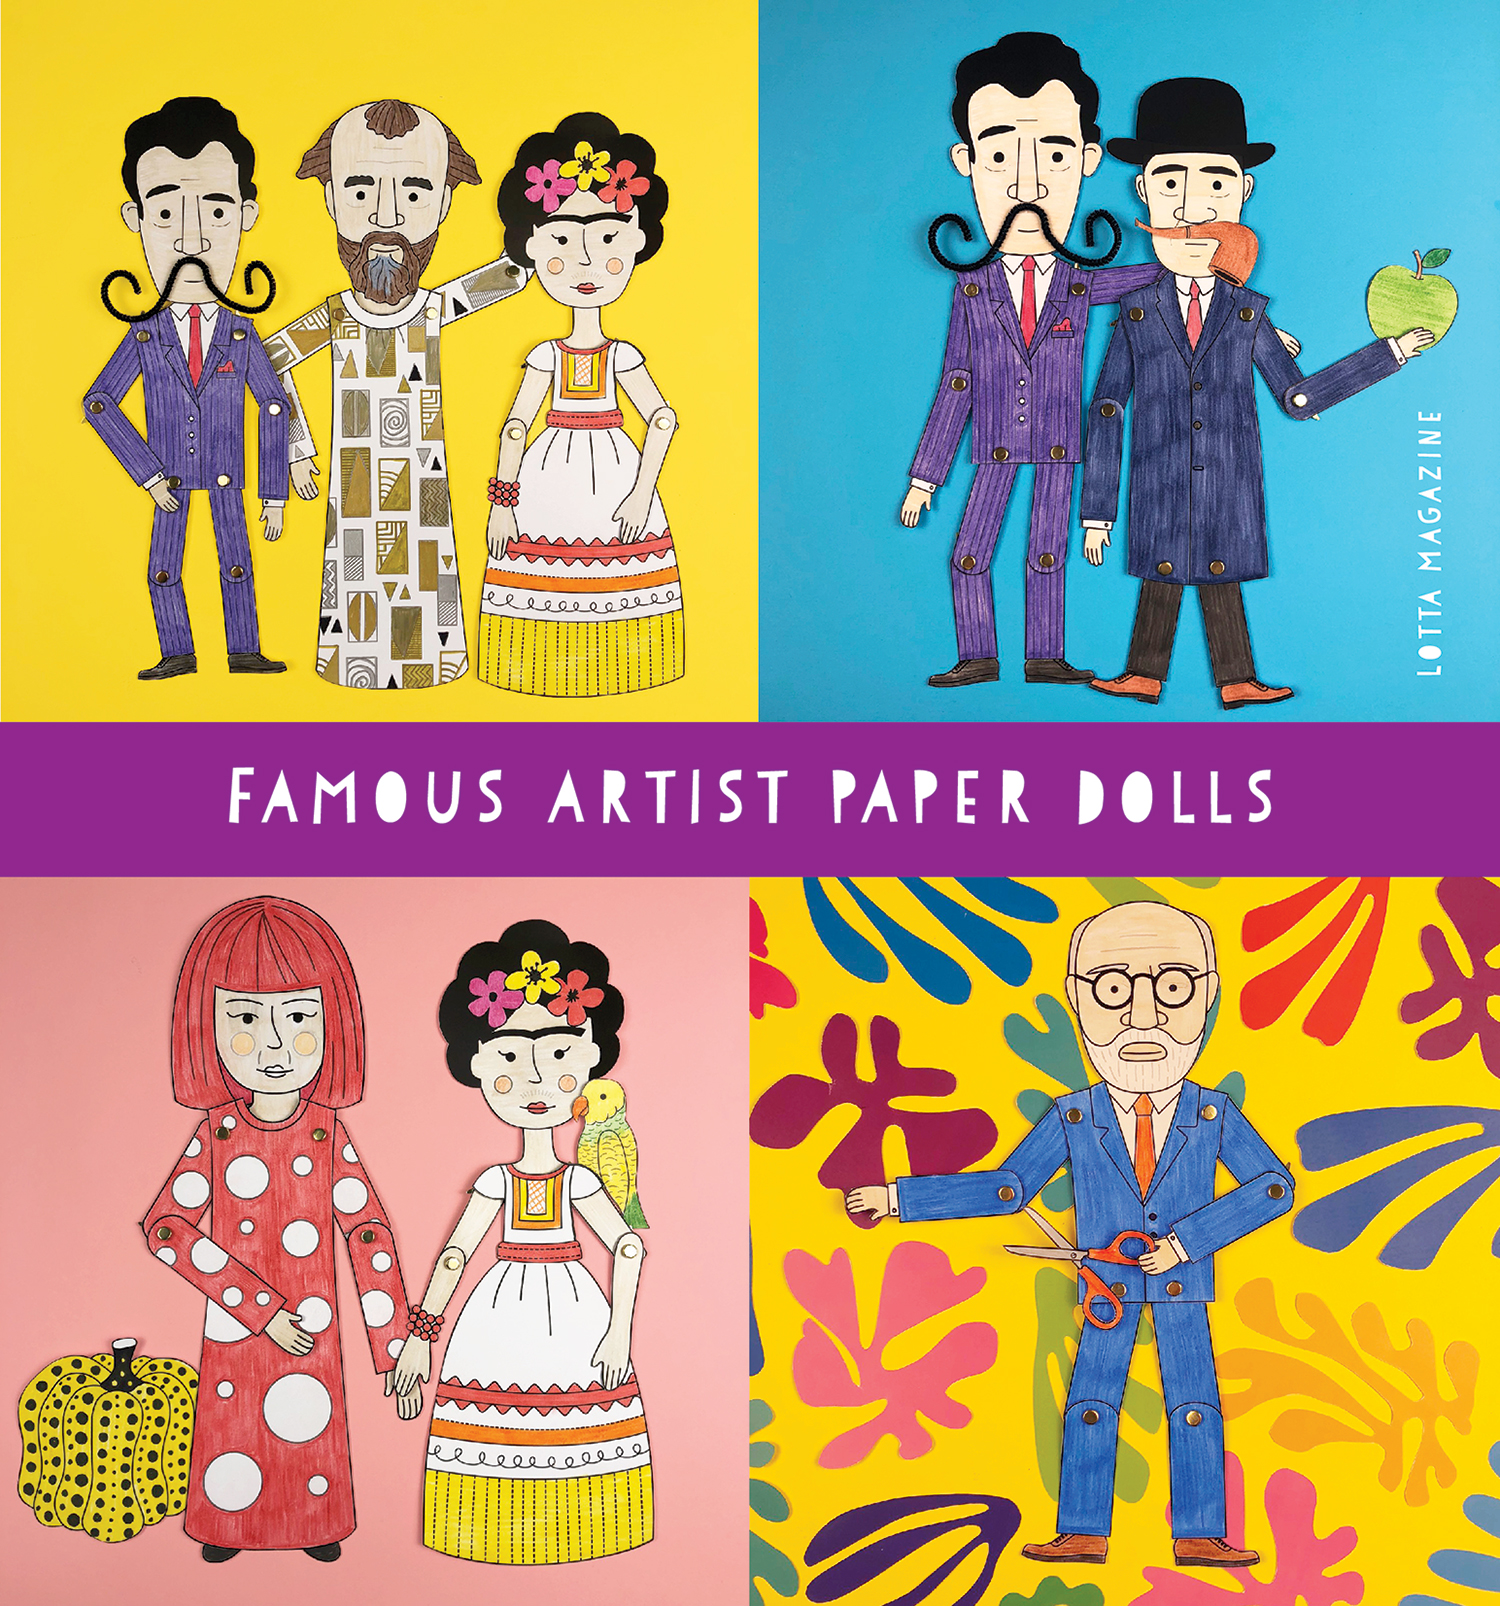 Lotta famous artist paper dolls